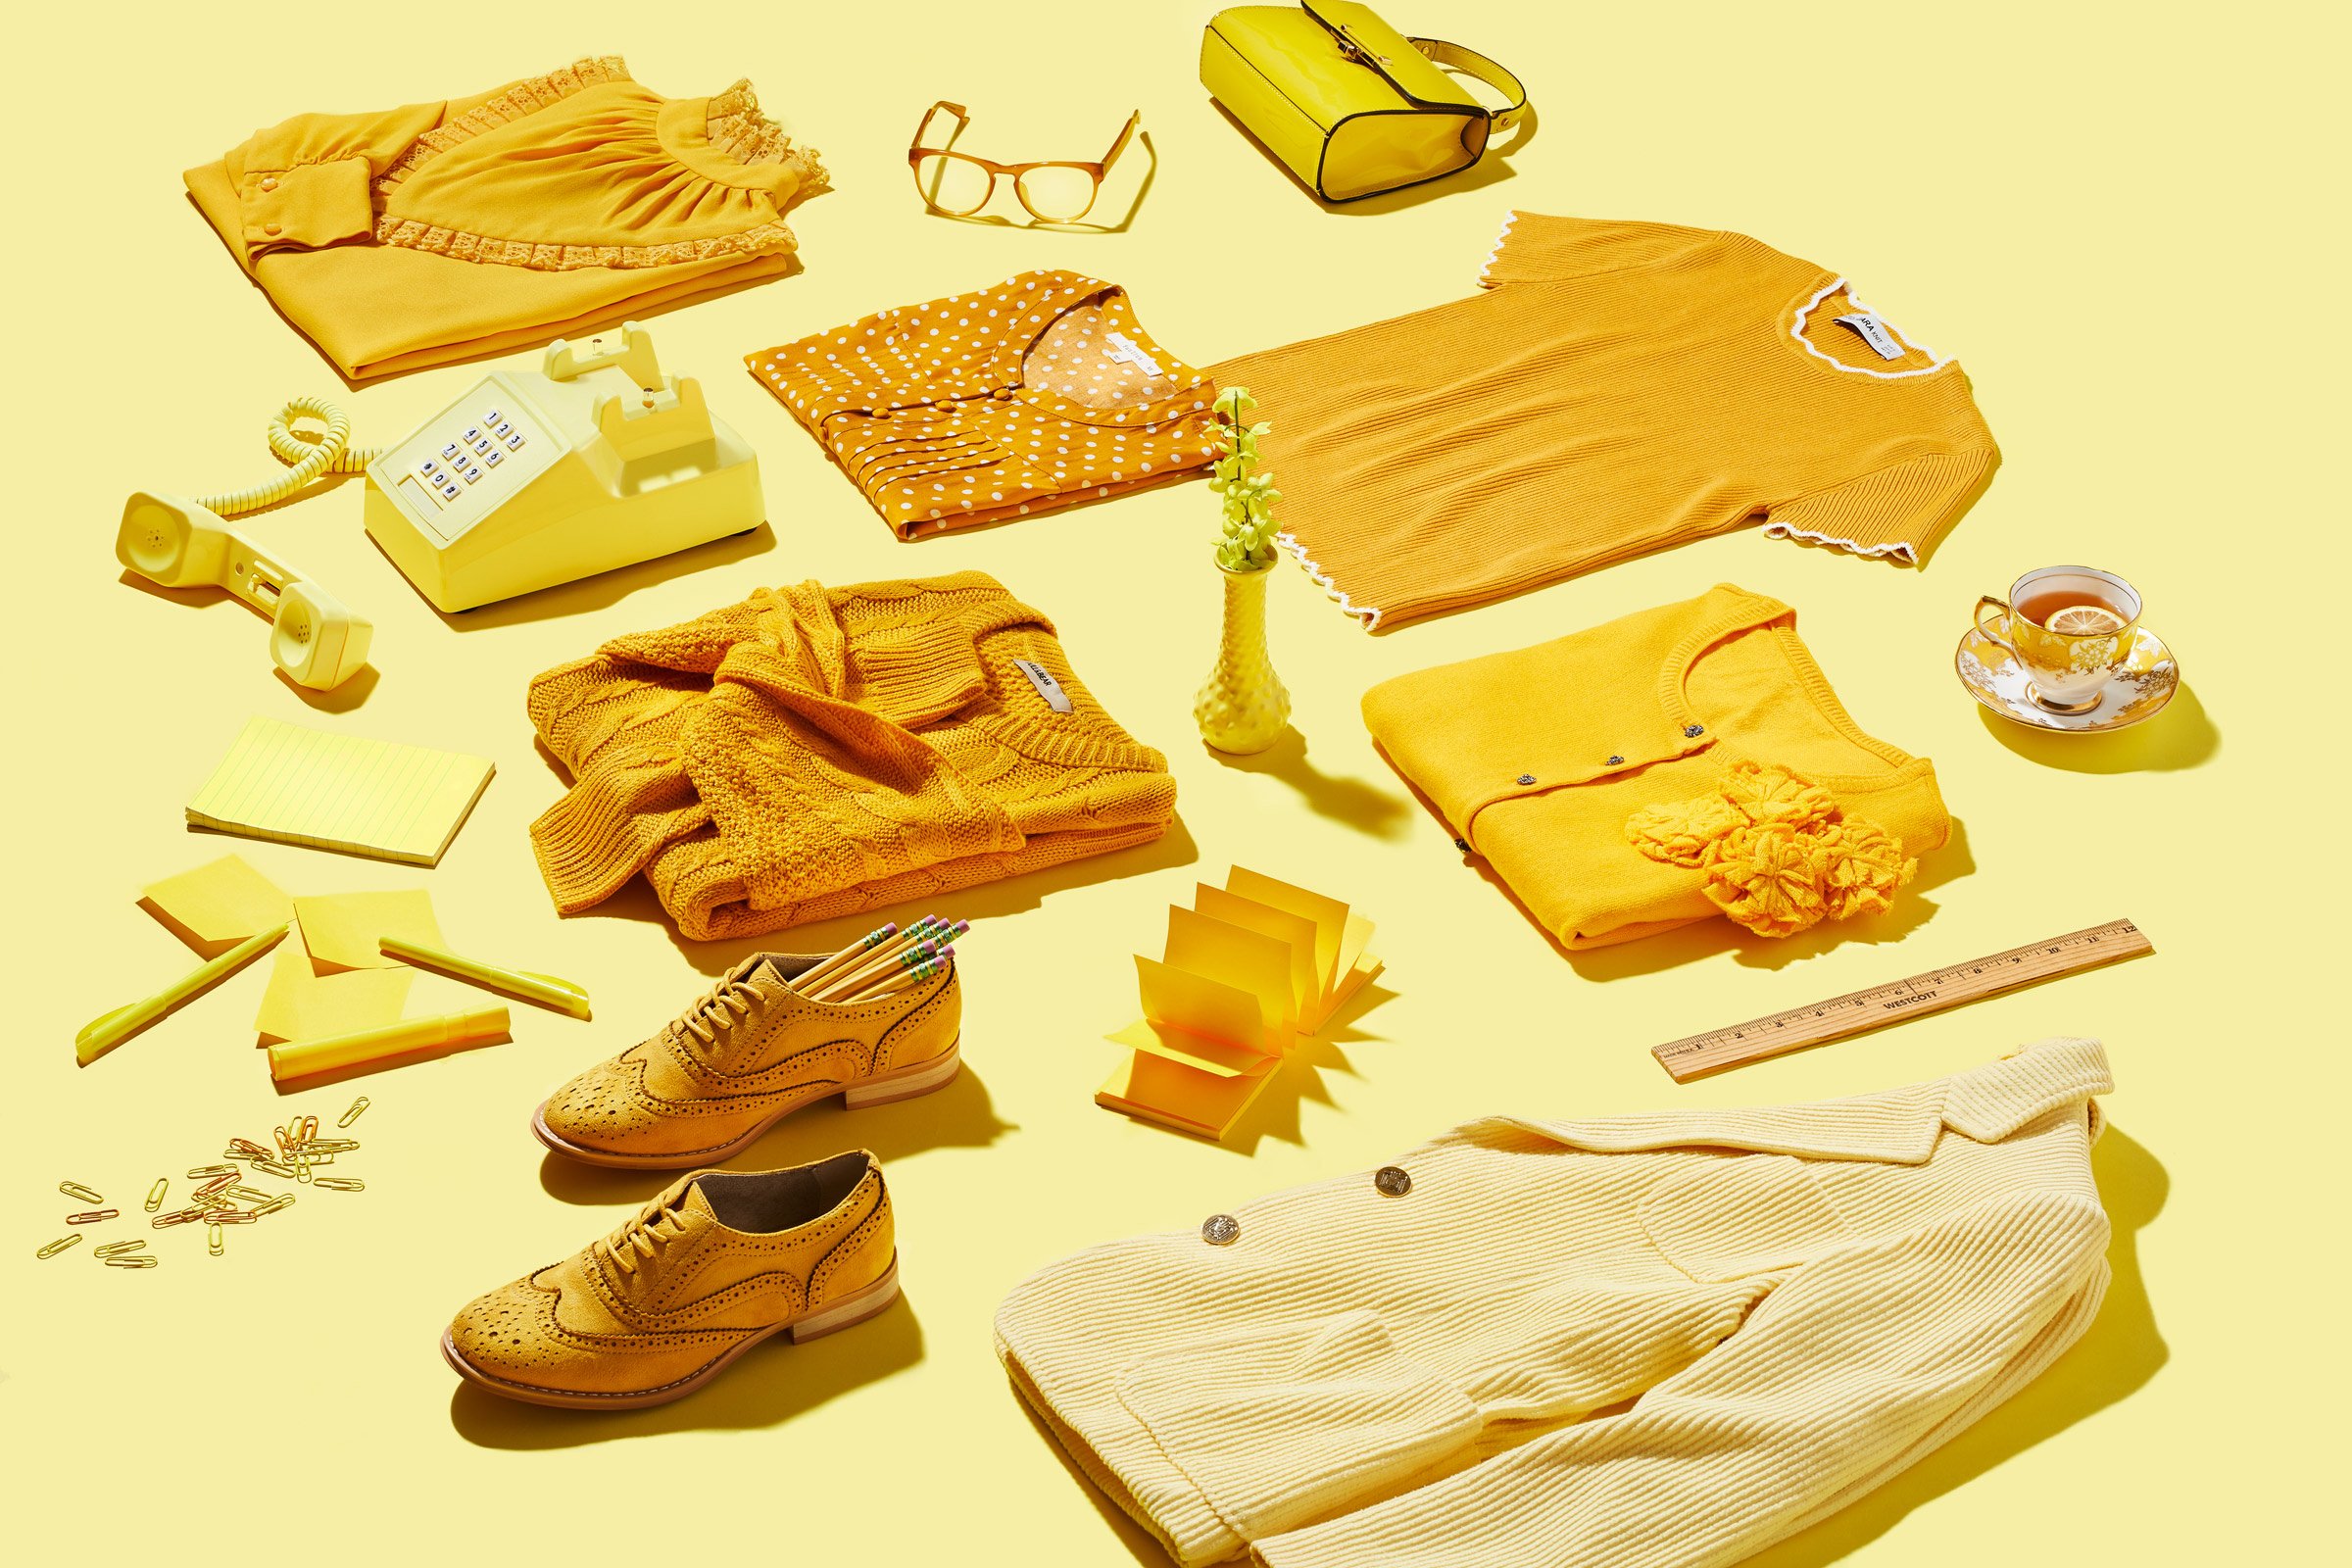 tidepool-BEAM-dan-simmons-yellow-theme-clothing-laydown1.jpeg